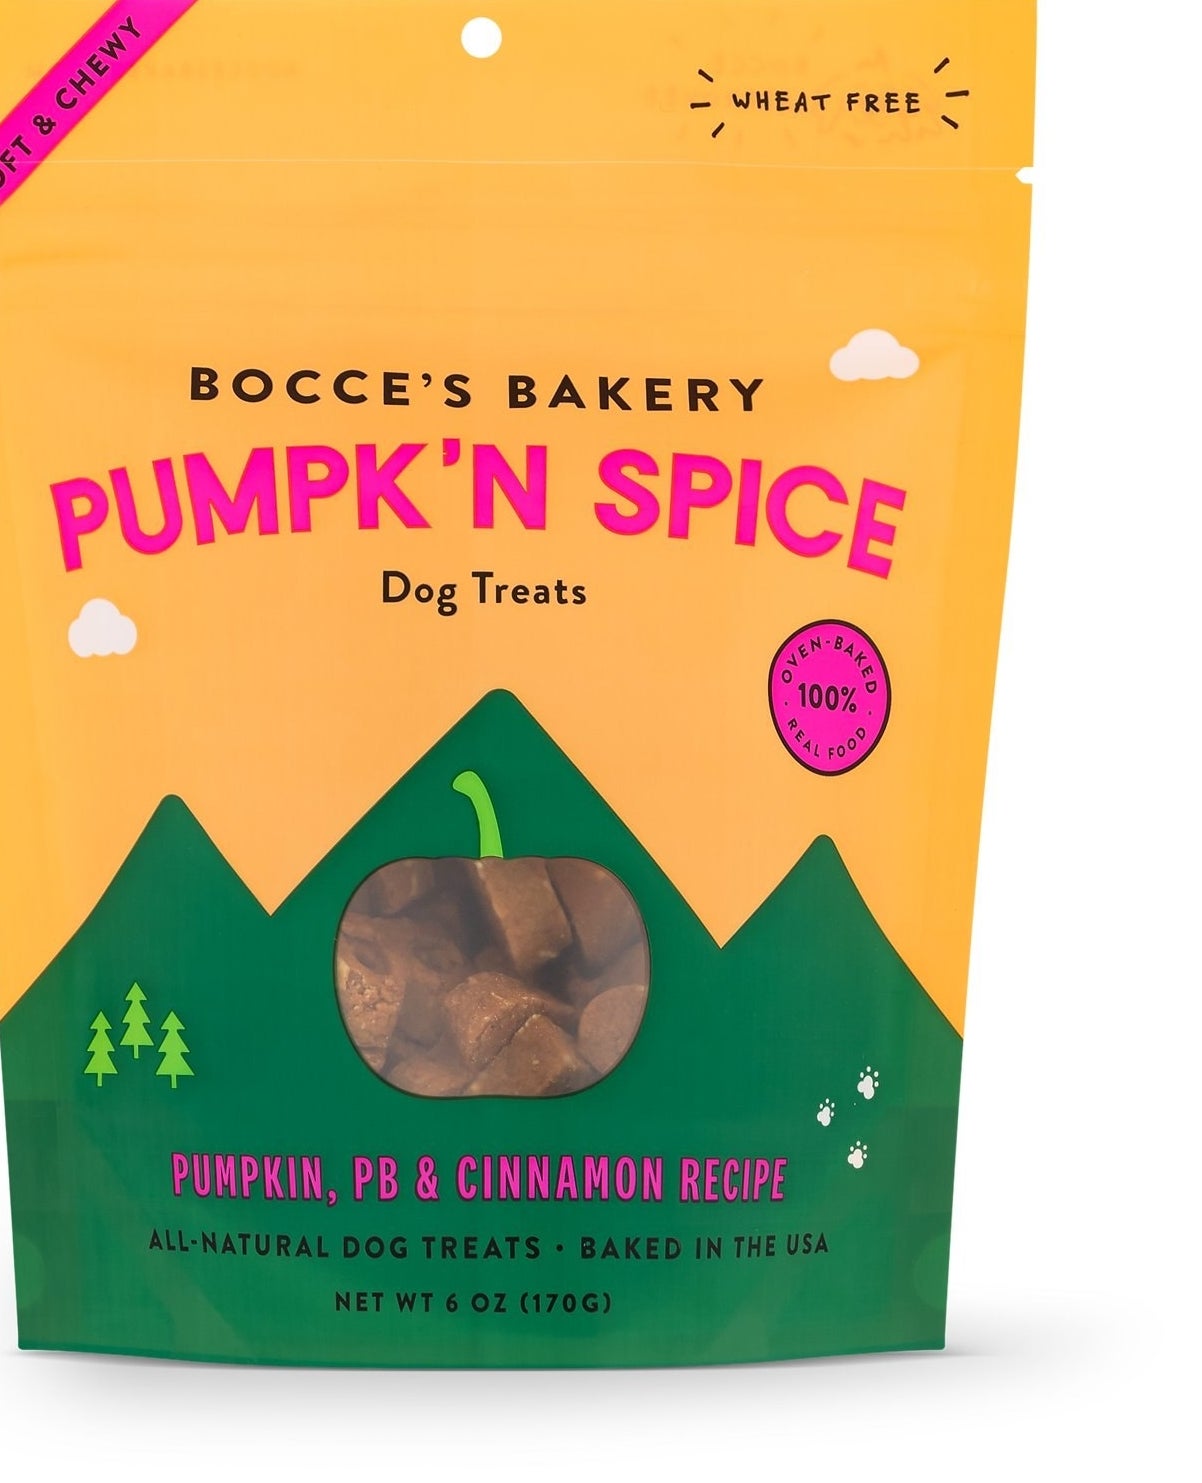 Pumpkin spice dog treats in a bag